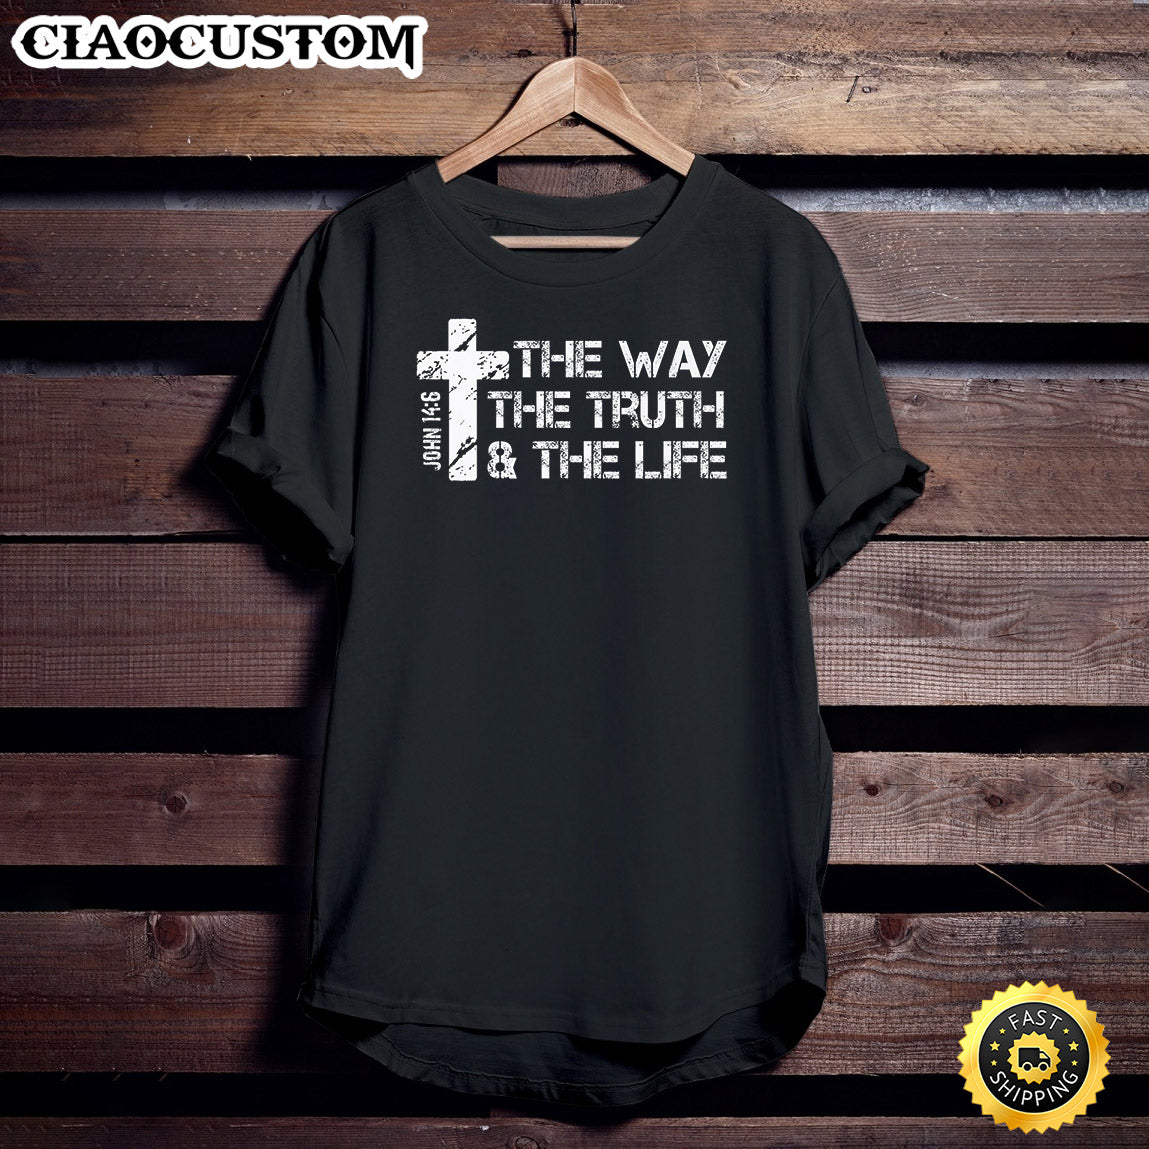 The Way, Truth, Life - John 14 6 Bible Verse Faith Premium T-Shirt - Christian Shirt